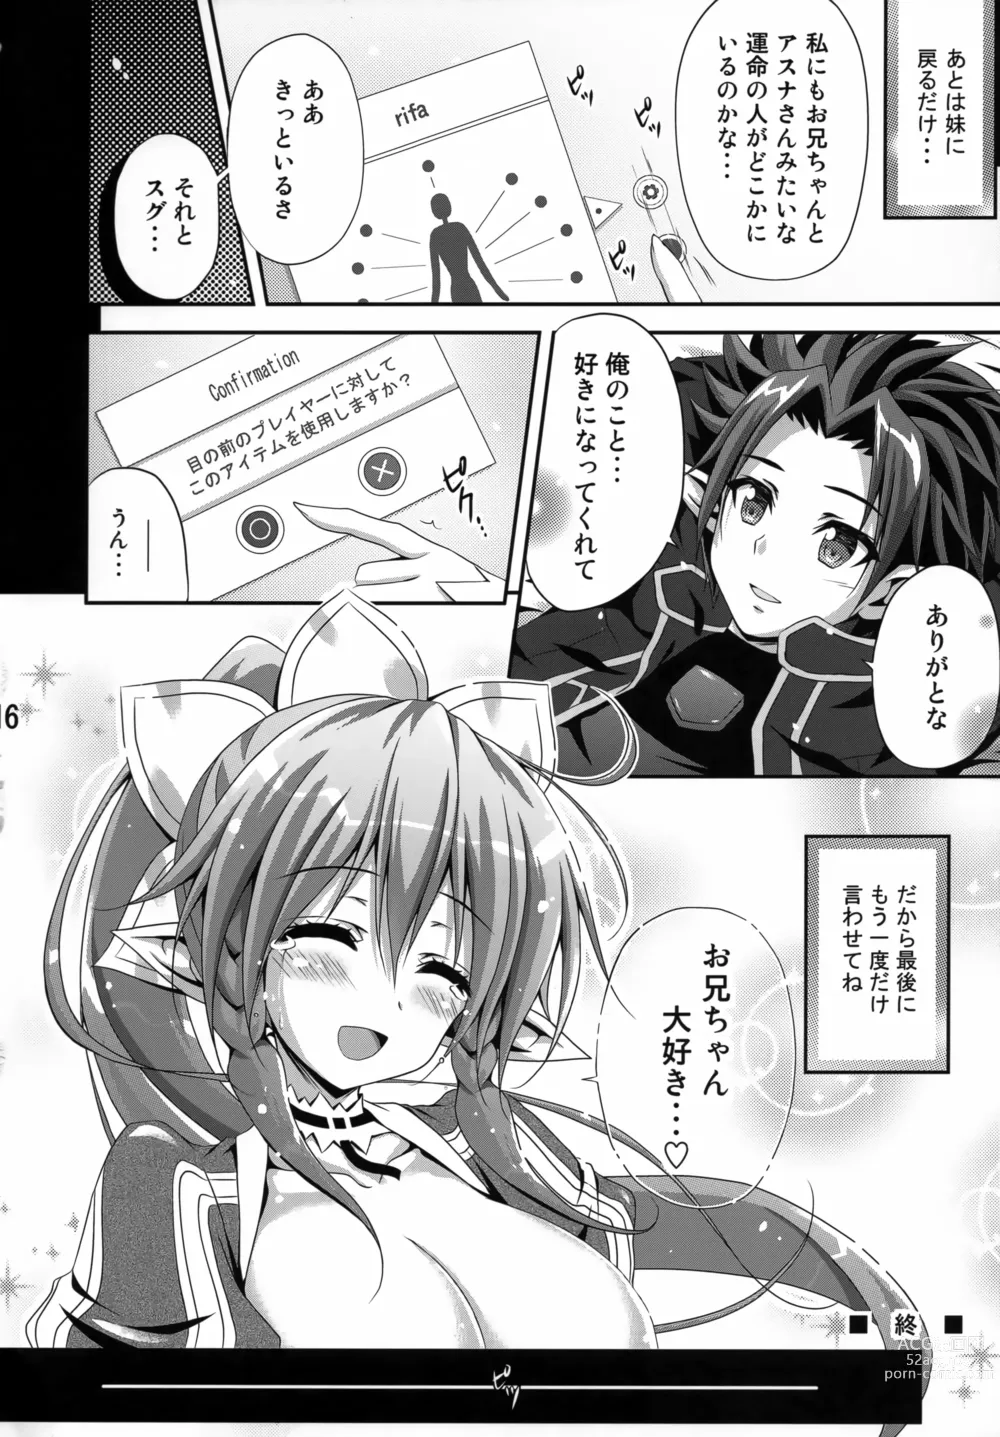 Page 16 of doujinshi Leafa x Quest